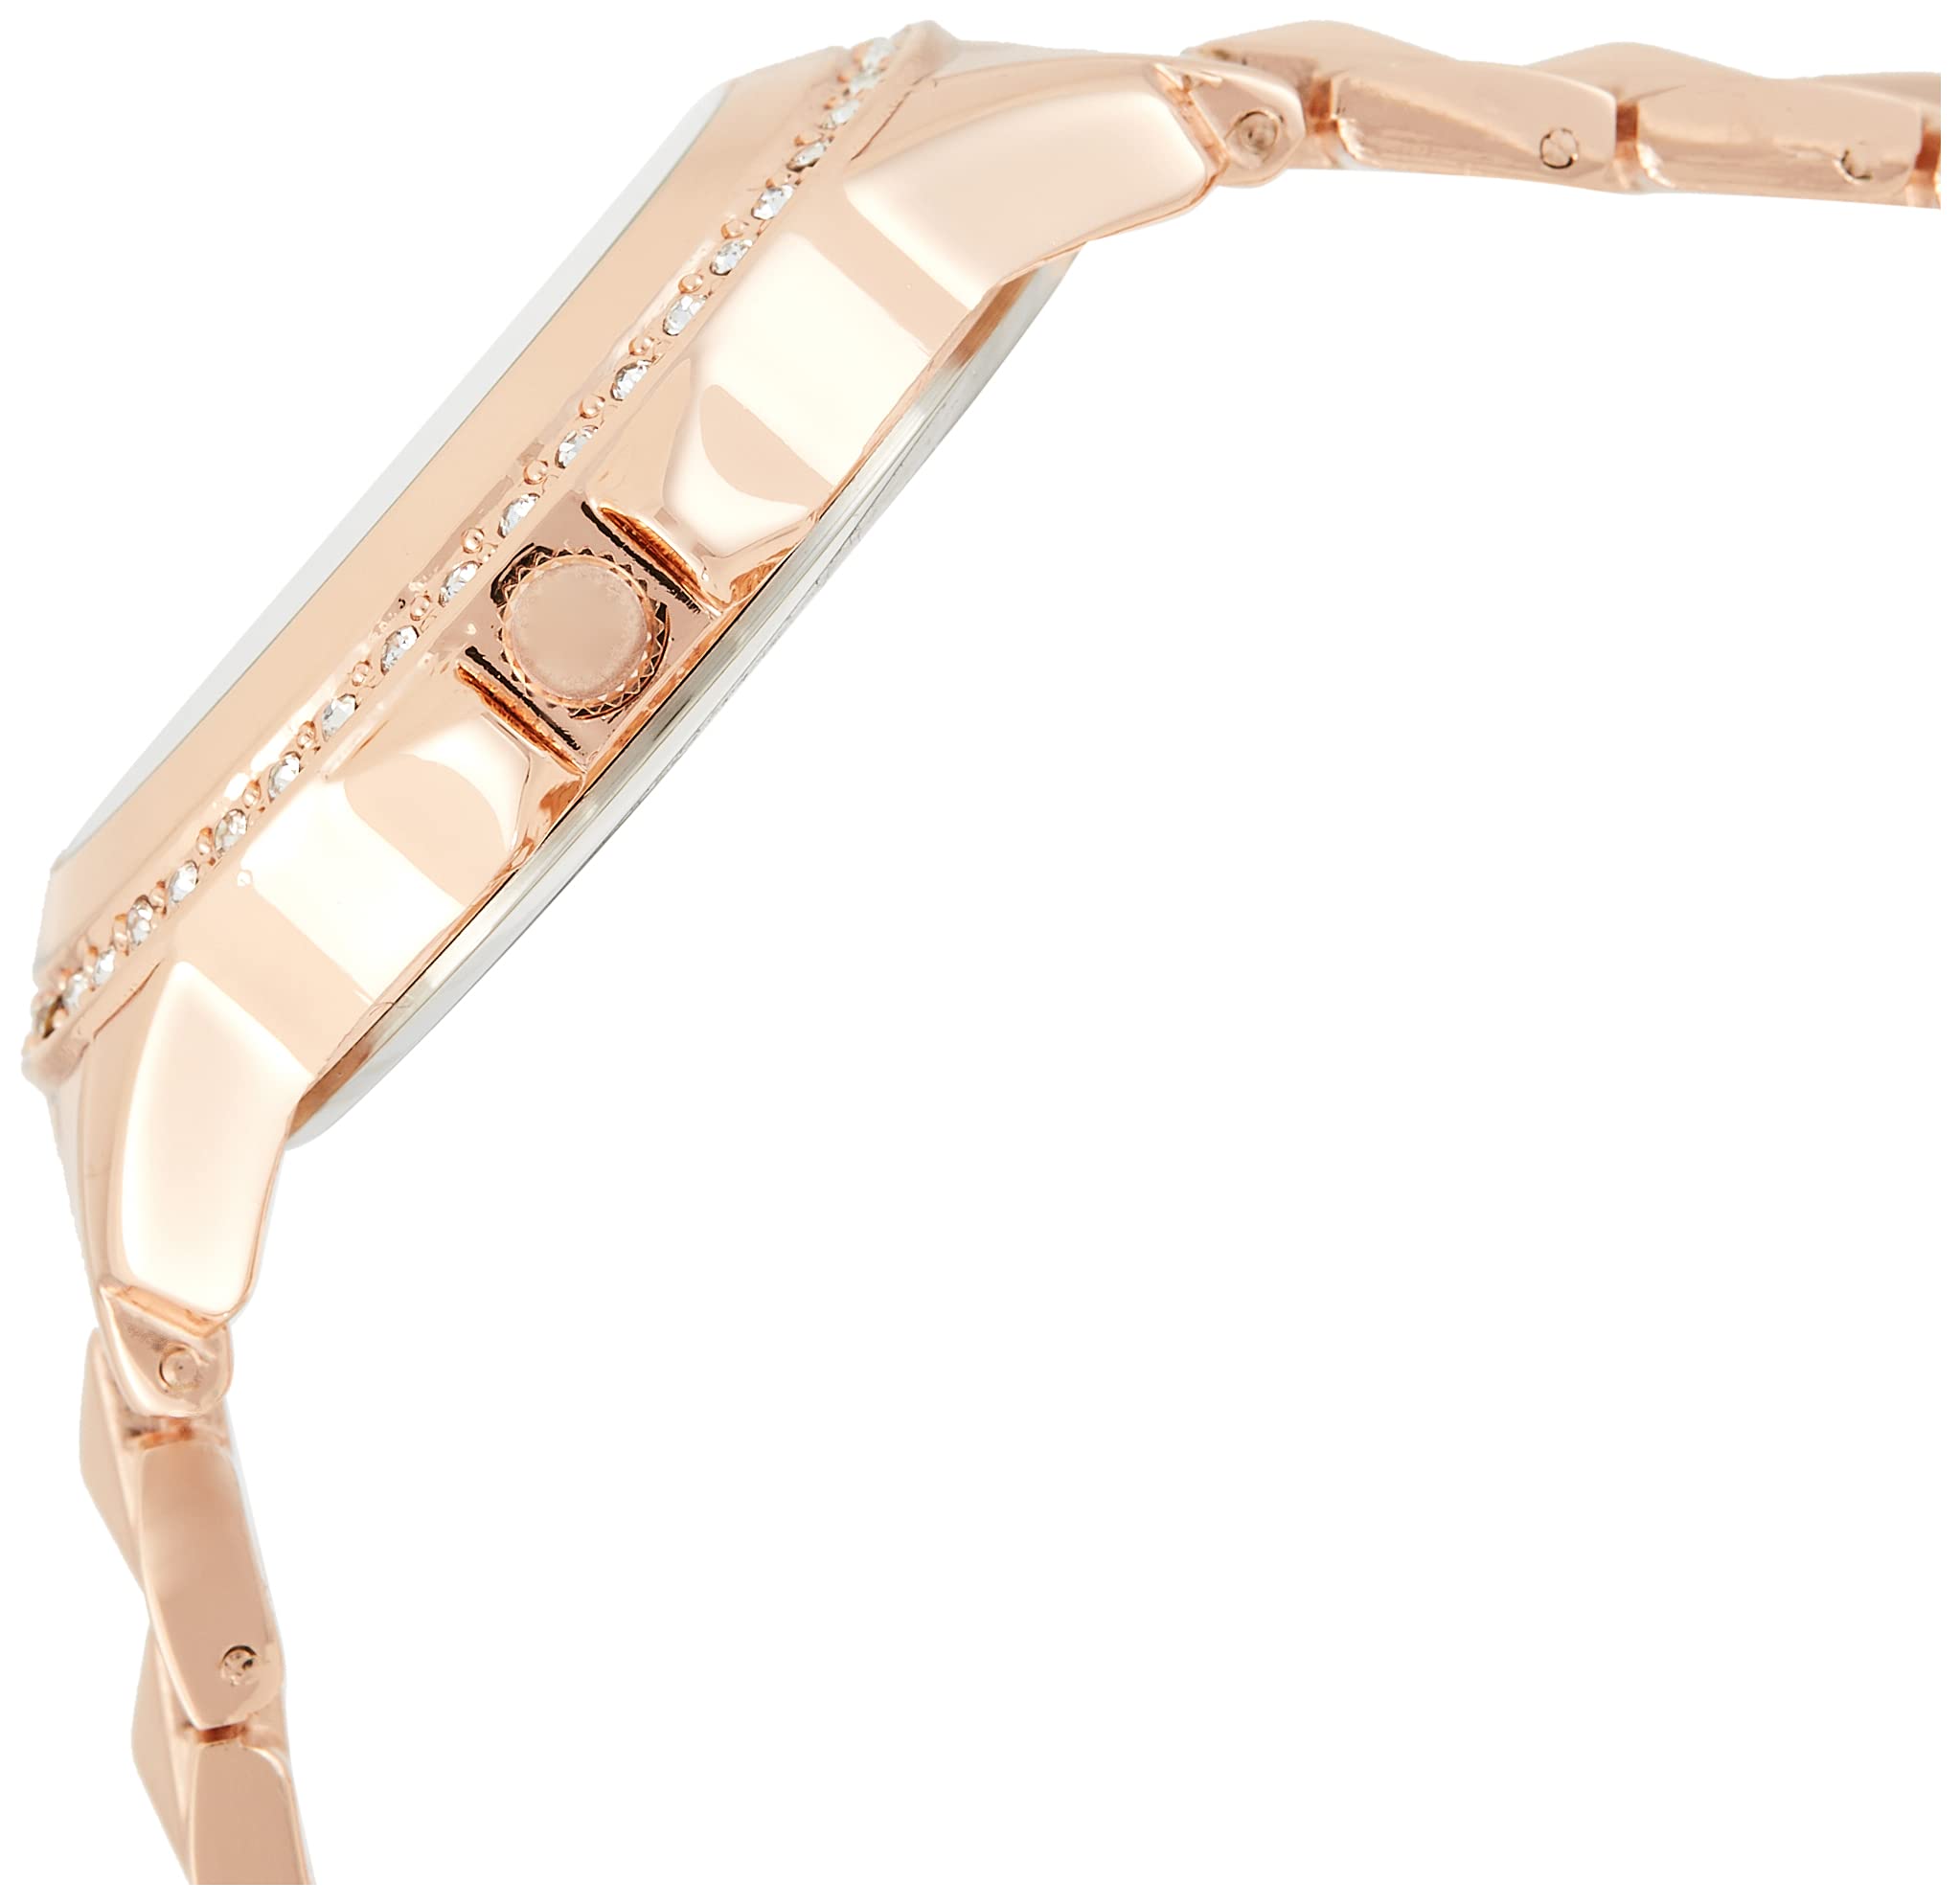 U.S. Polo Assn. Women's Watch with Crystal Studded Bezel, Alloy Bracelet Strap with Jewelry Clasp